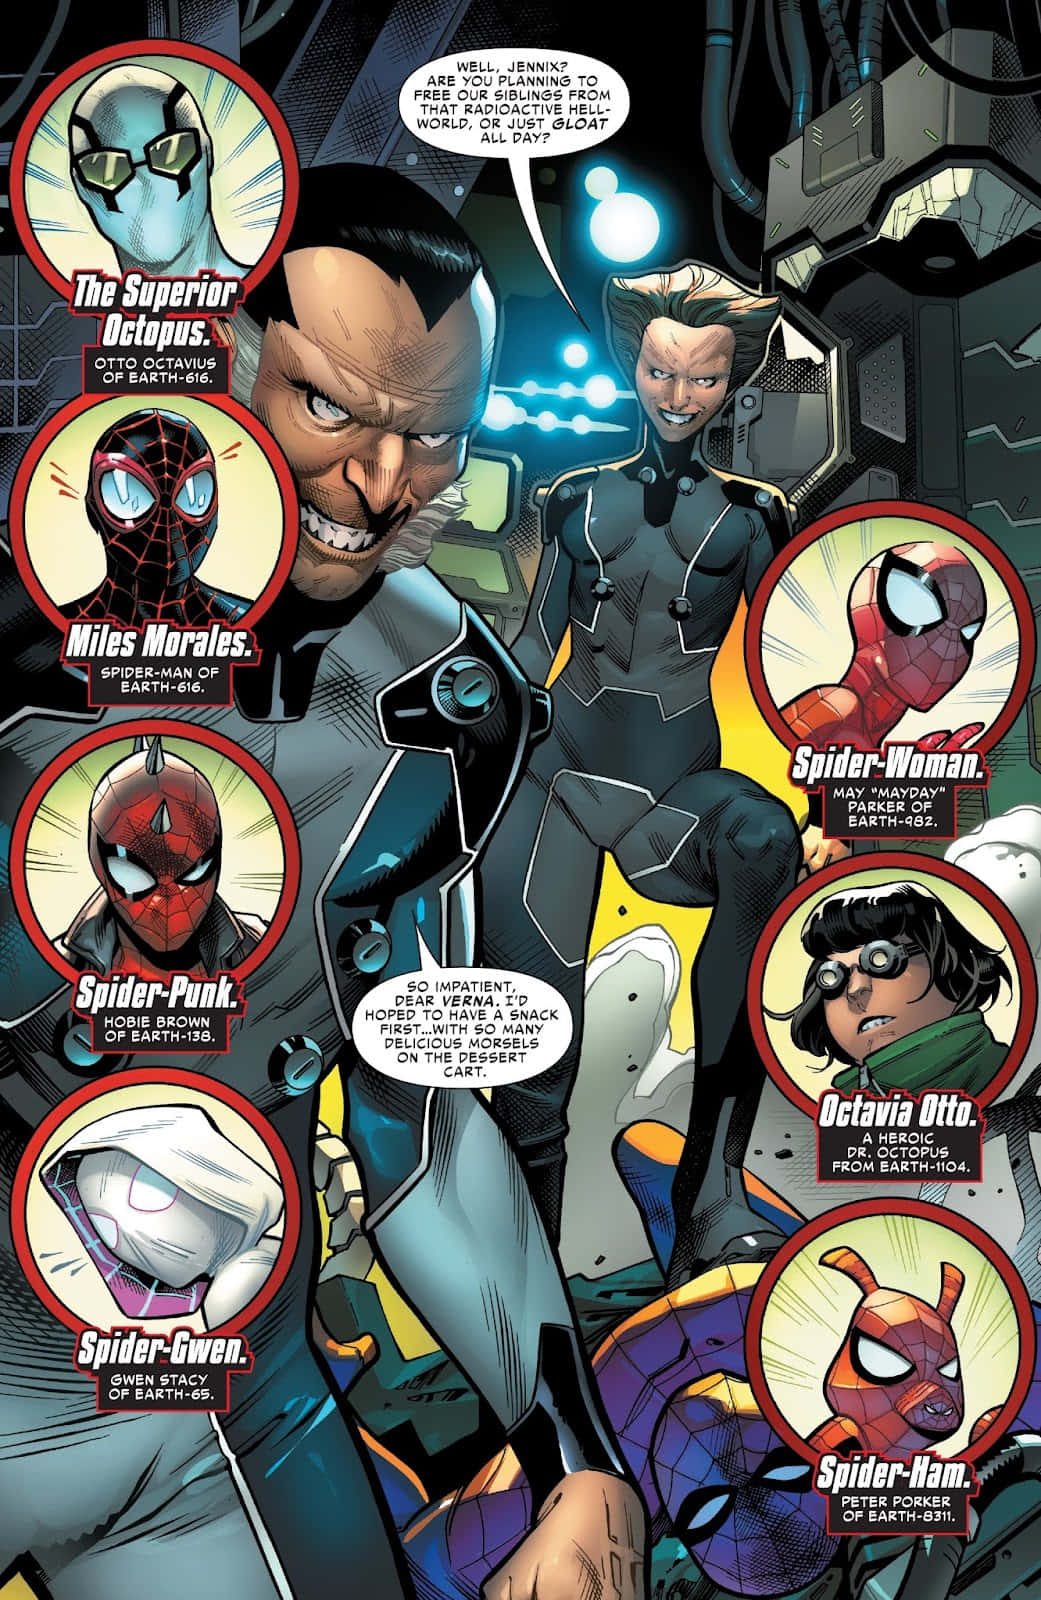 Spider-Geddon - The Ultimate Battle of Spider-Verse Heroes Wallpaper